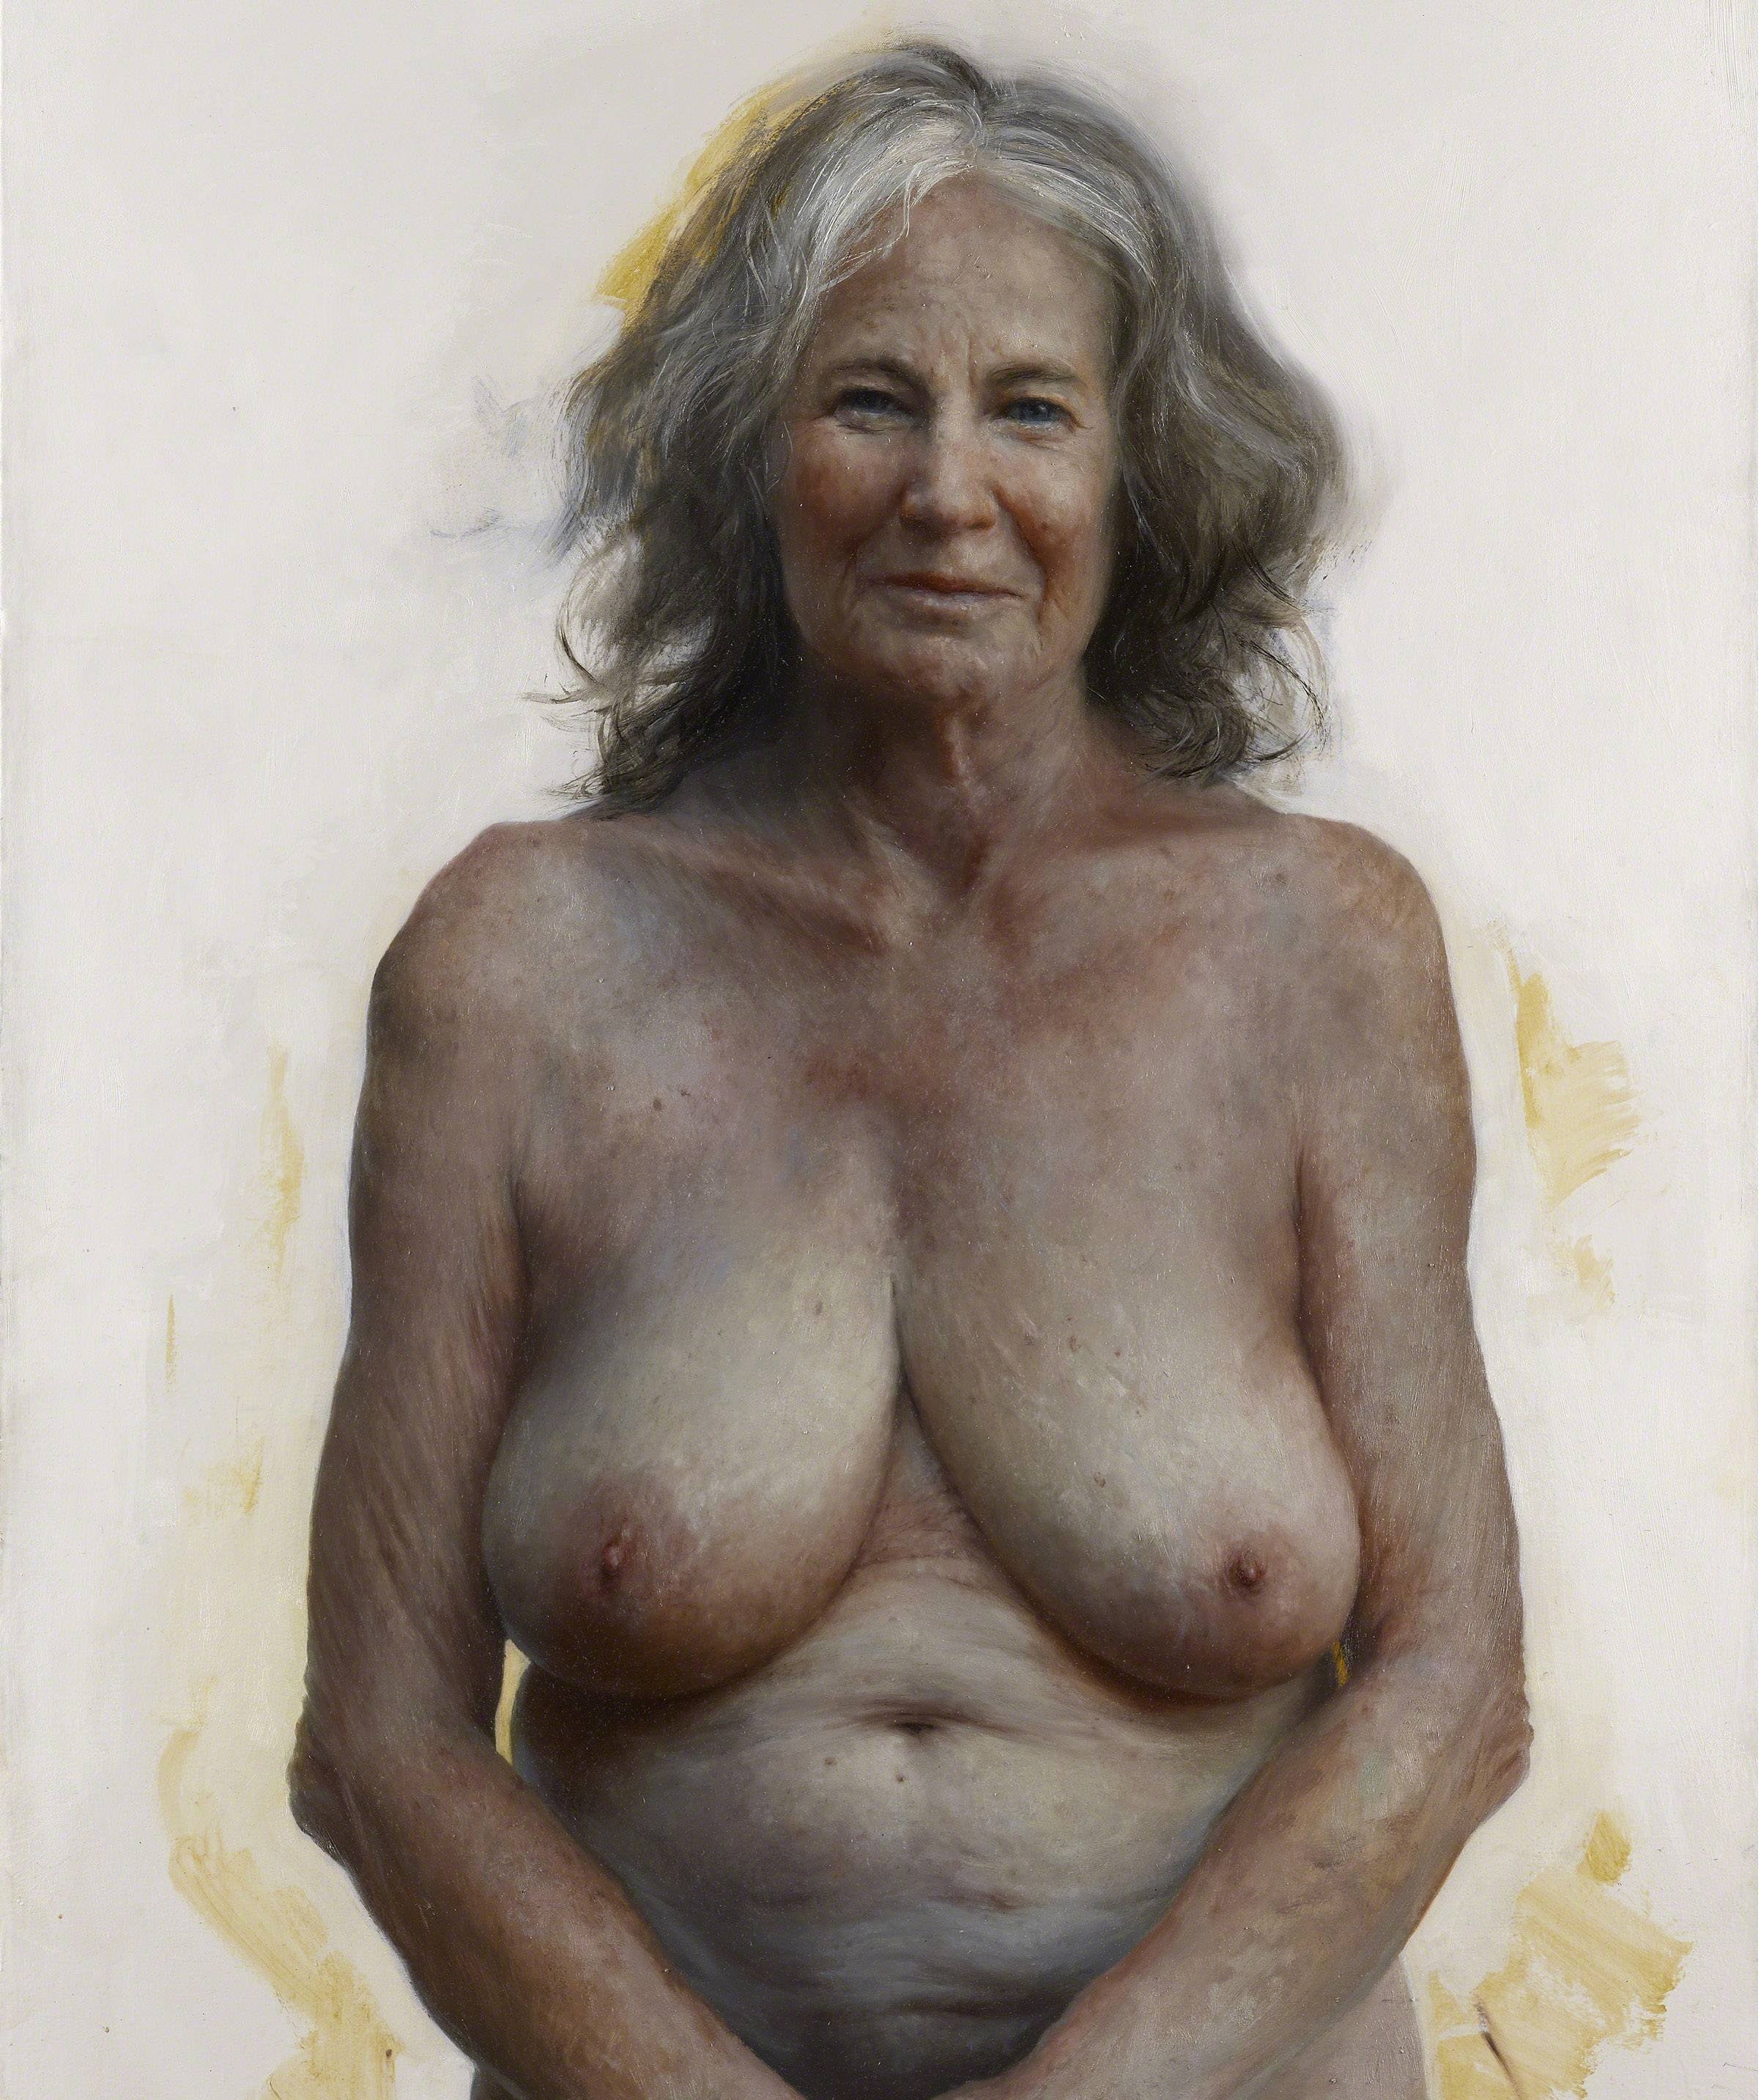 Beautiful old naked woman